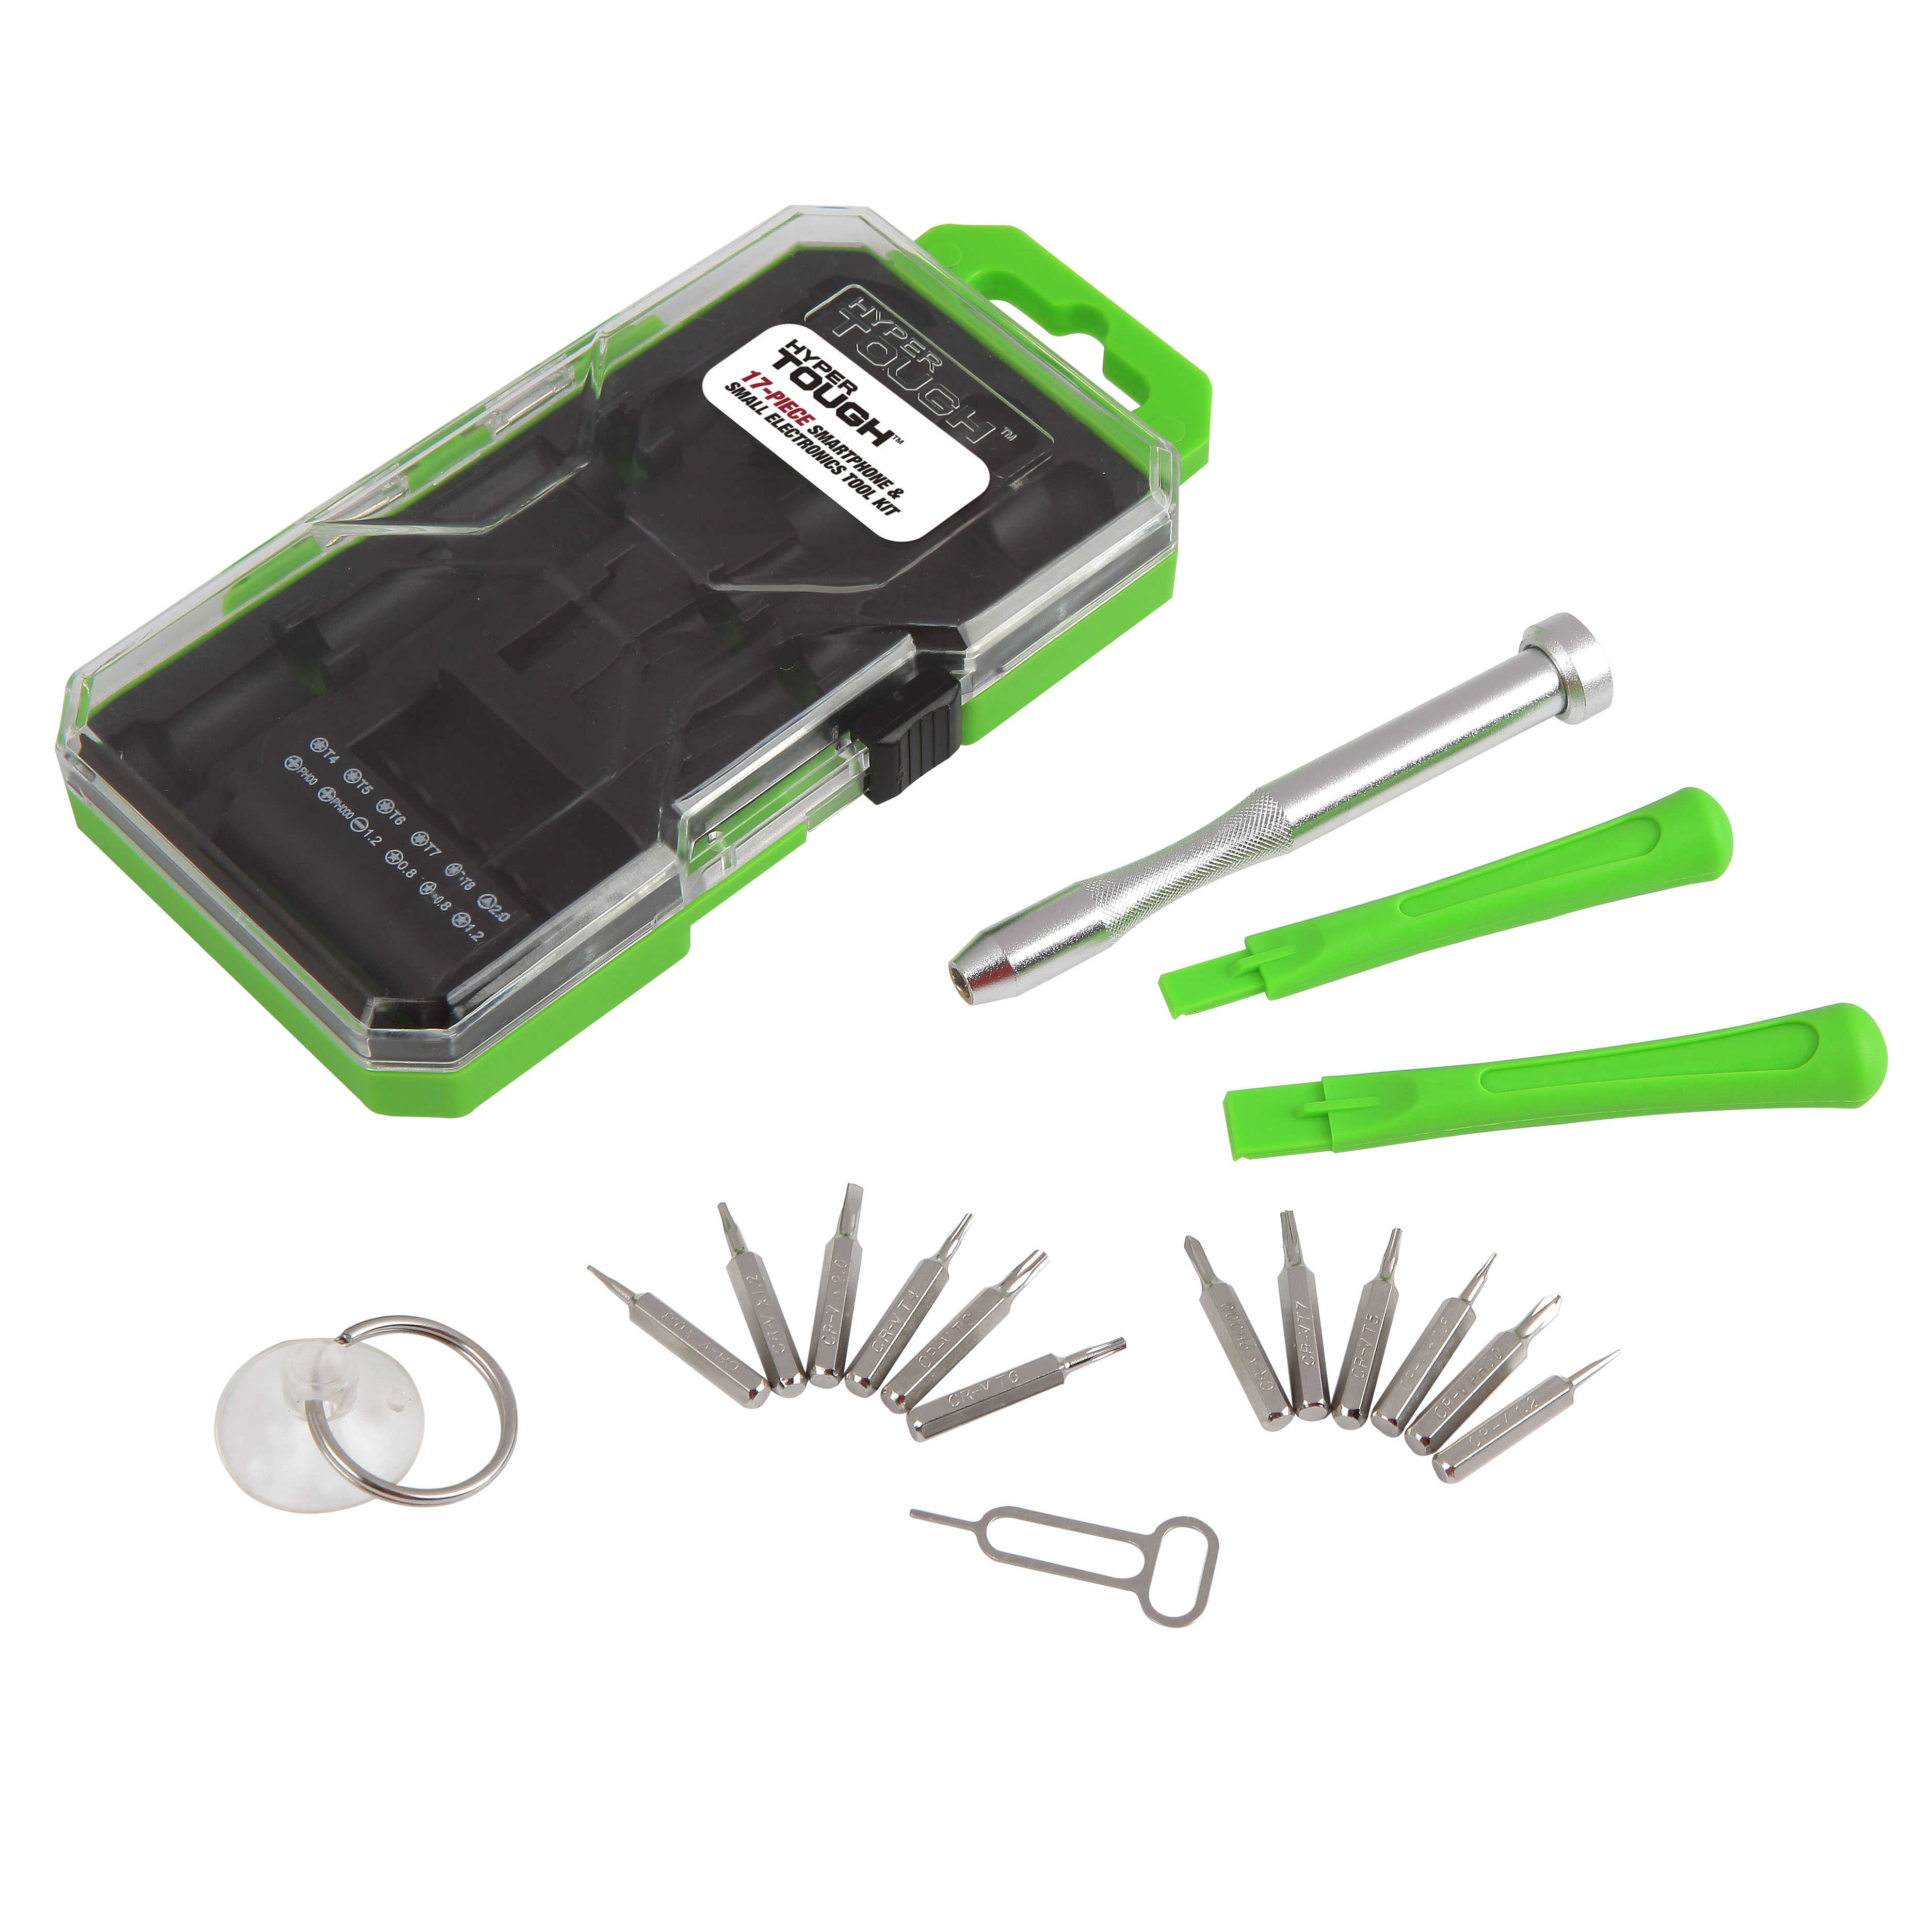 Hyper Tough Cell Phone Repair Kit